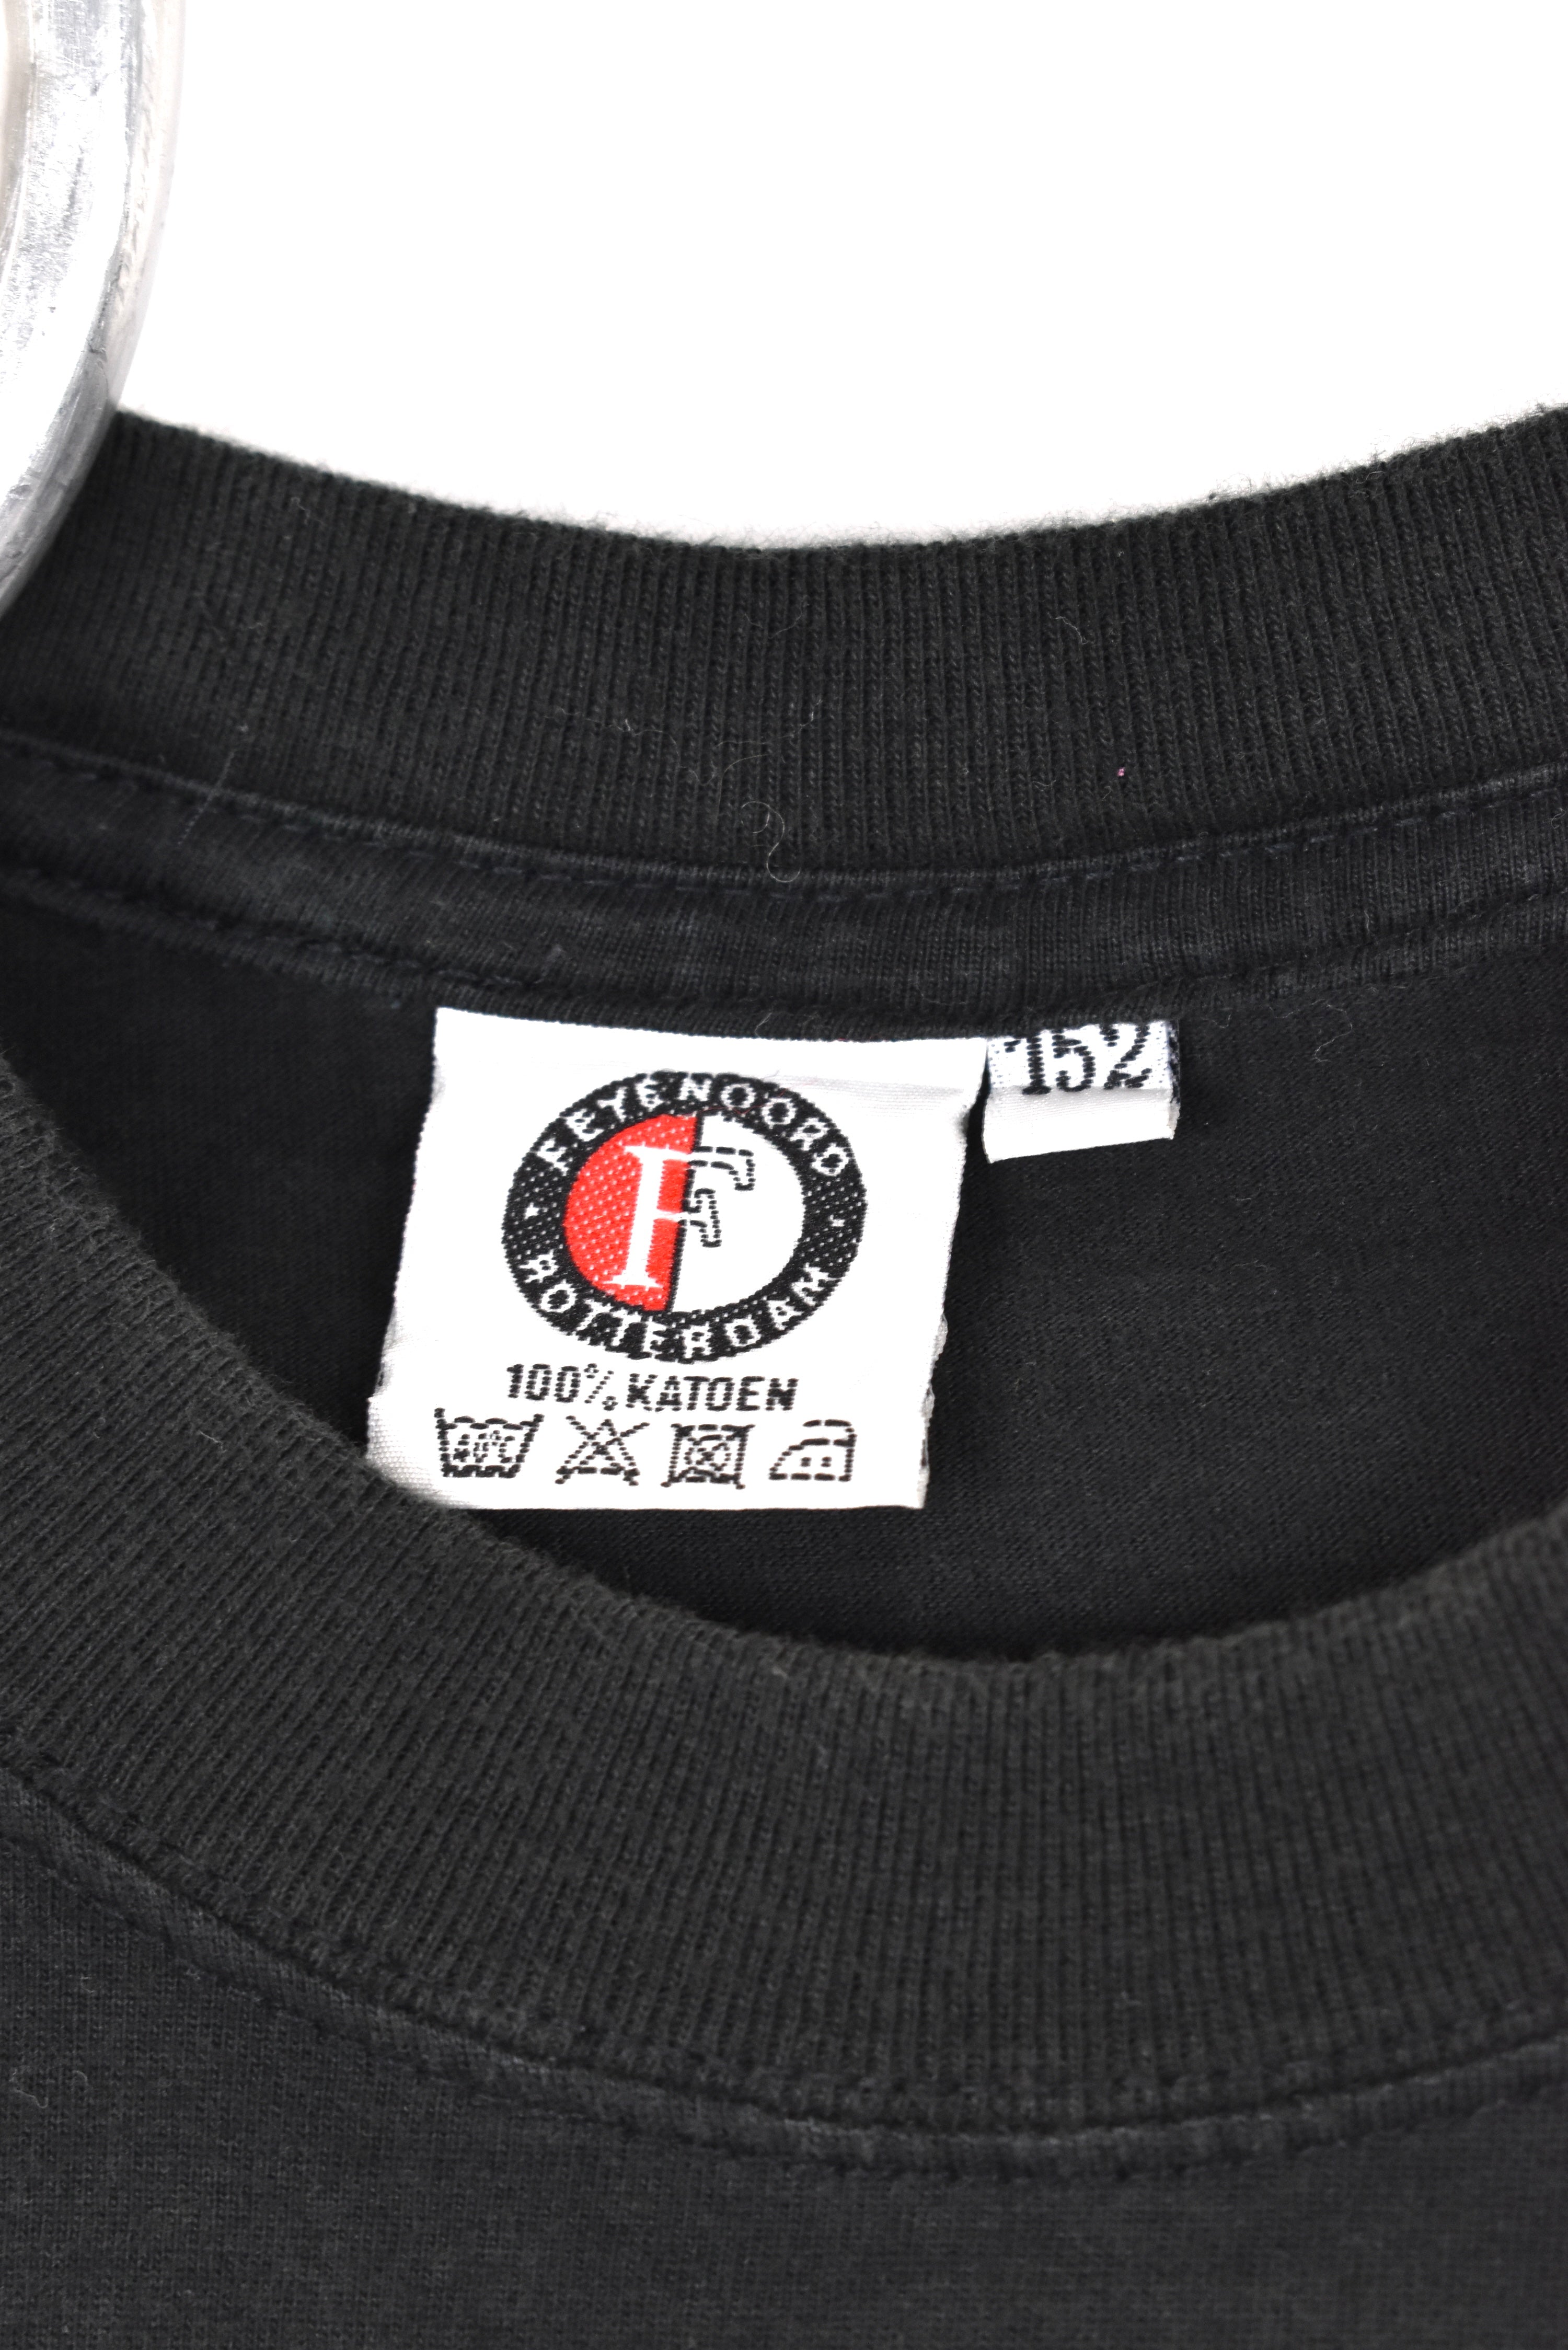 Vintage Feyenoord Rotterdam shirt, 1999 soccer black graphic tee - AU XS PRO SPORT